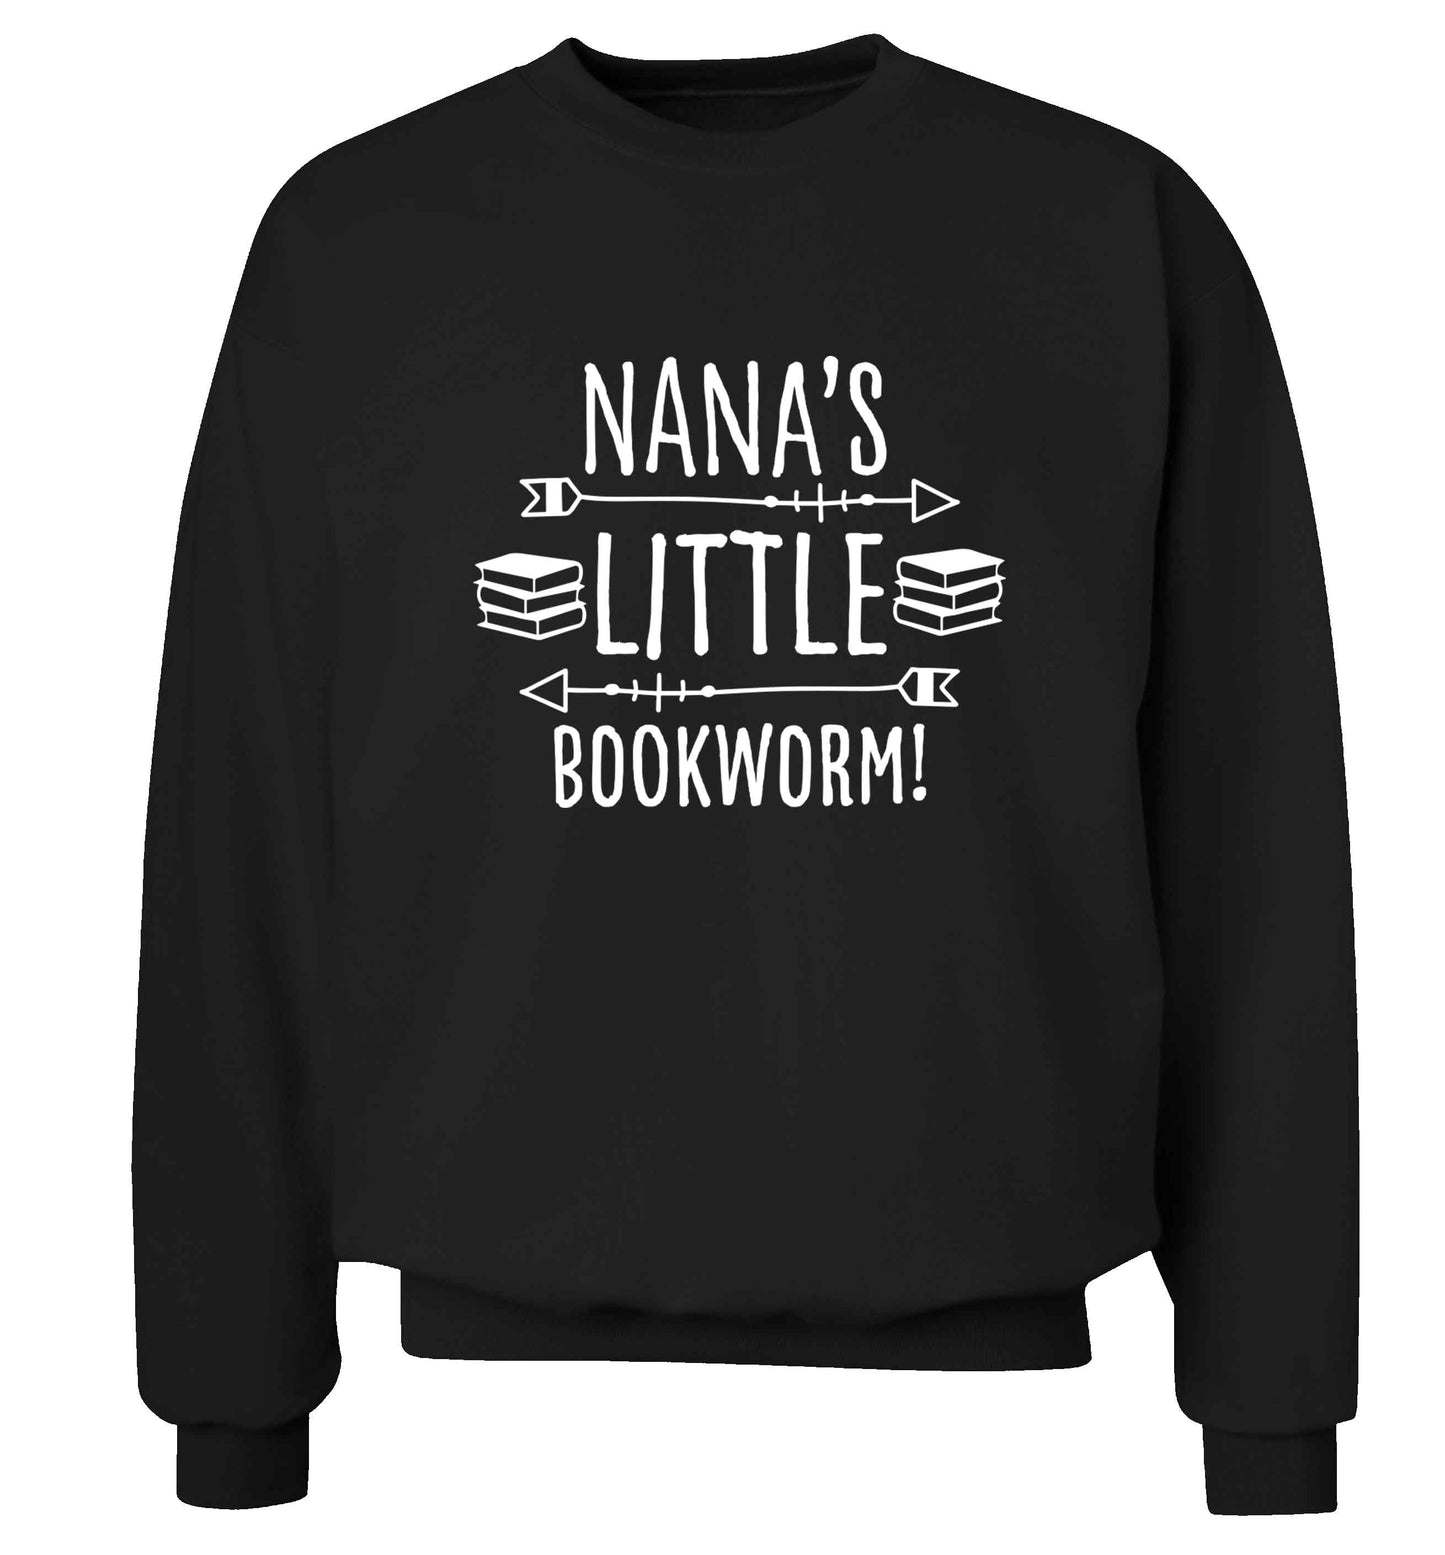 Nana's little bookworm adult's unisex black sweater 2XL